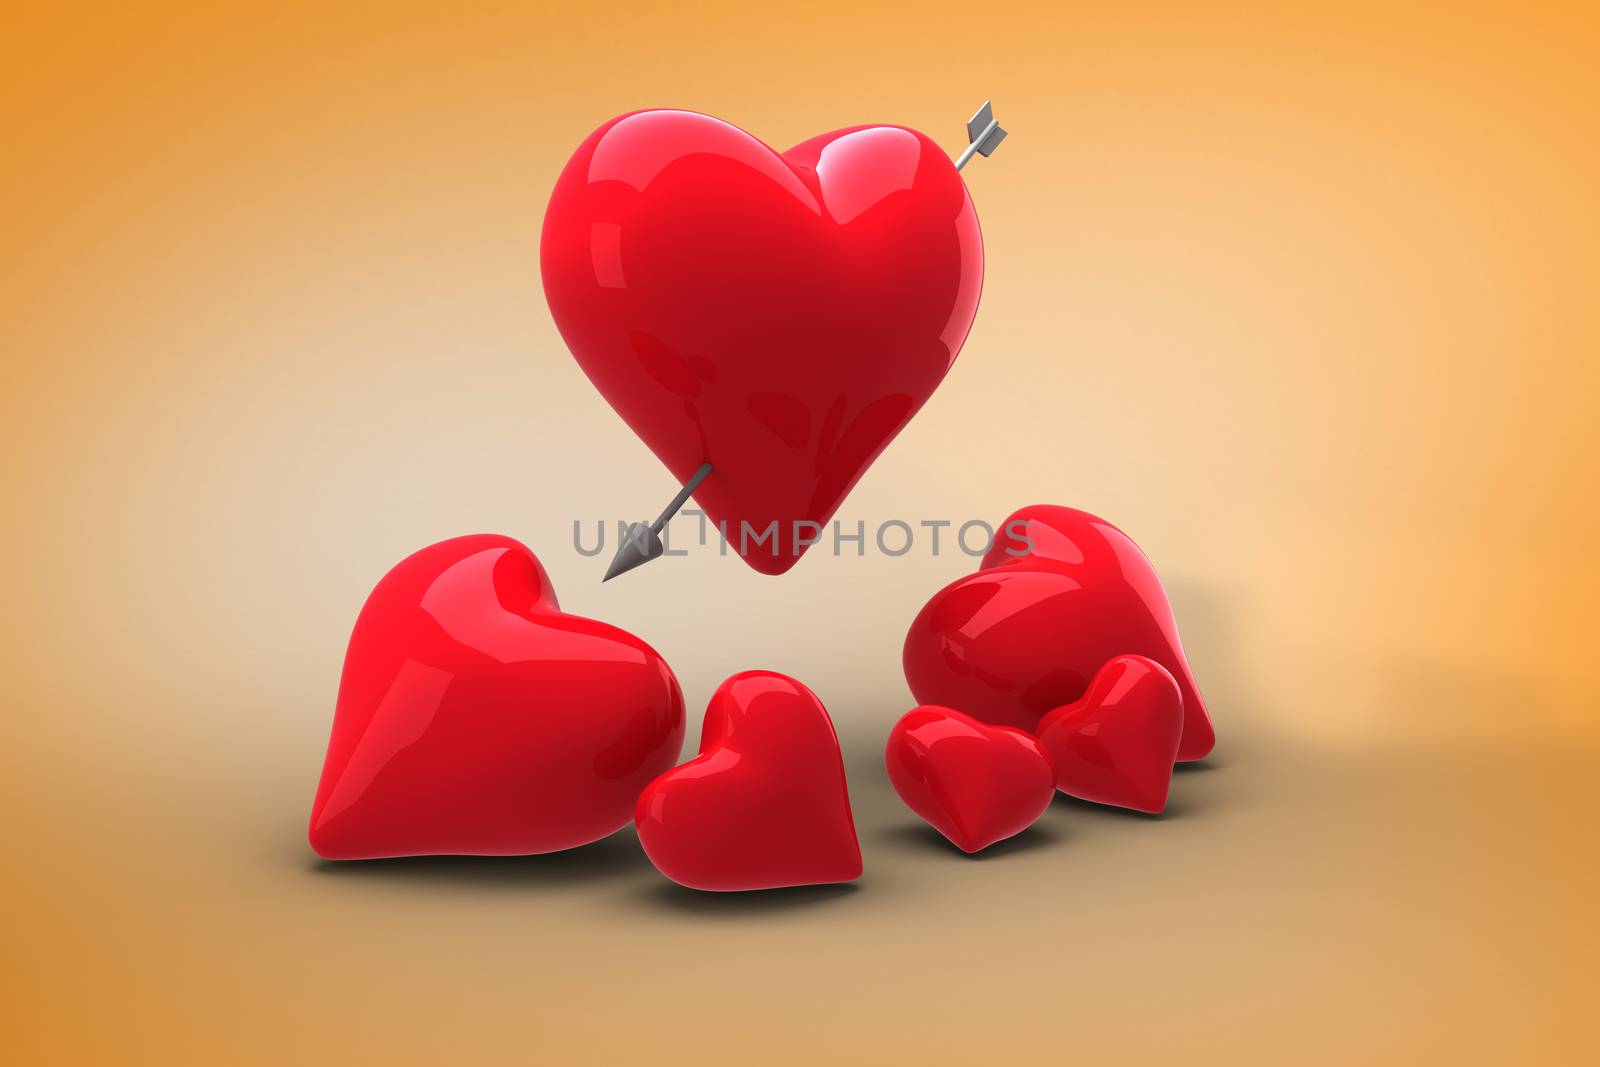 Love hearts against orange vignette